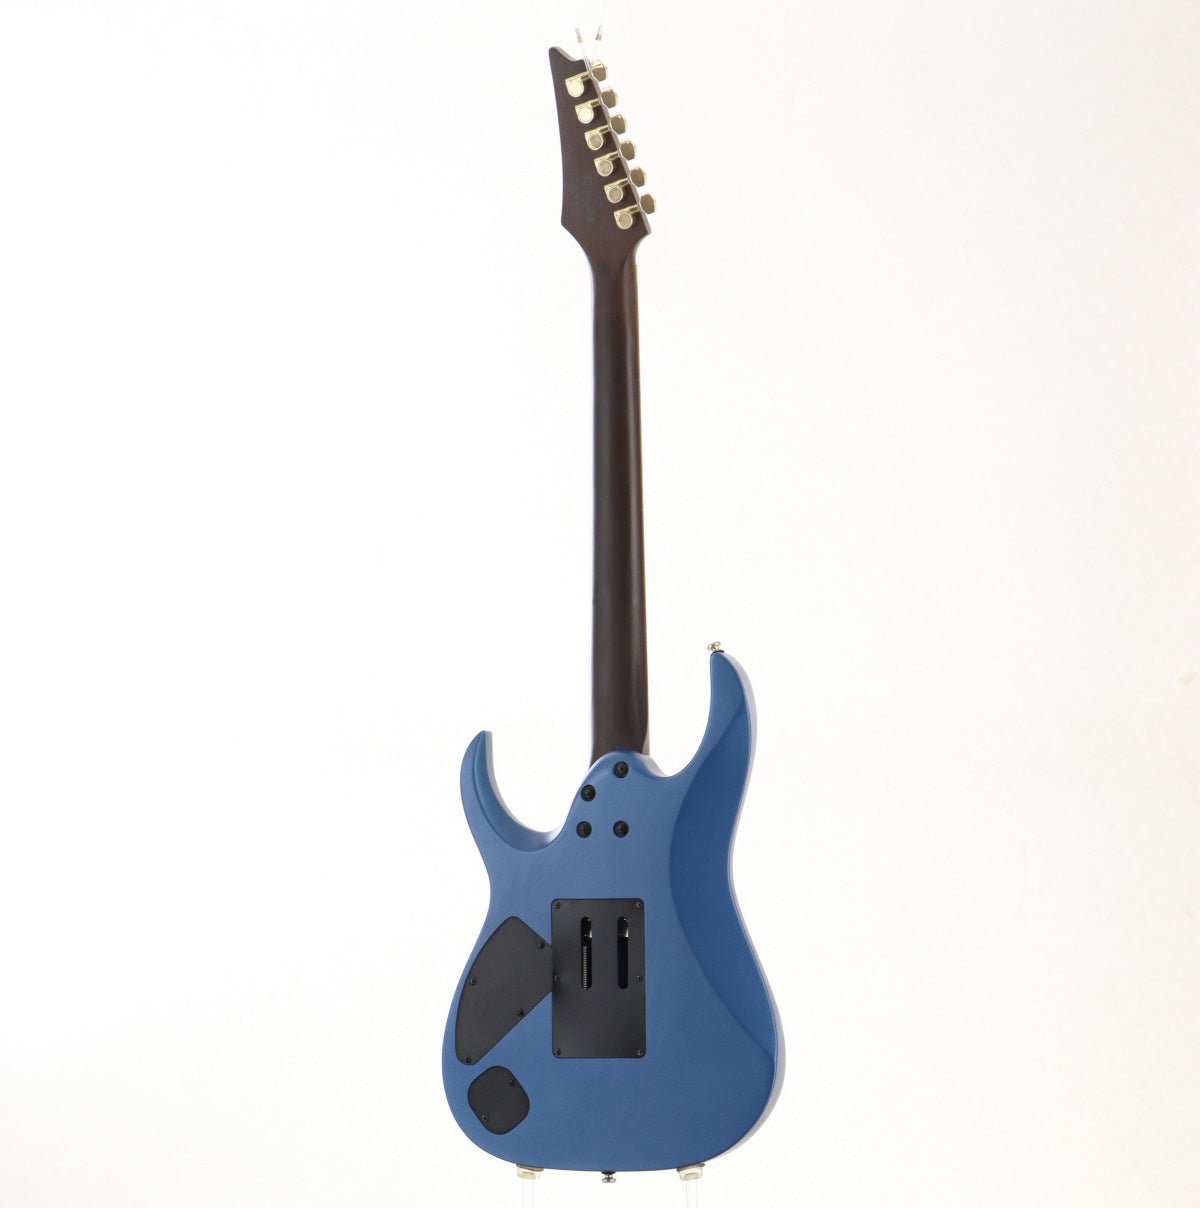 [SN I200307979] USED Ibanez / High Performance Series RGA42HPT-LBM [3.21kg / 2020] Ibanez Electric Guitar [08]